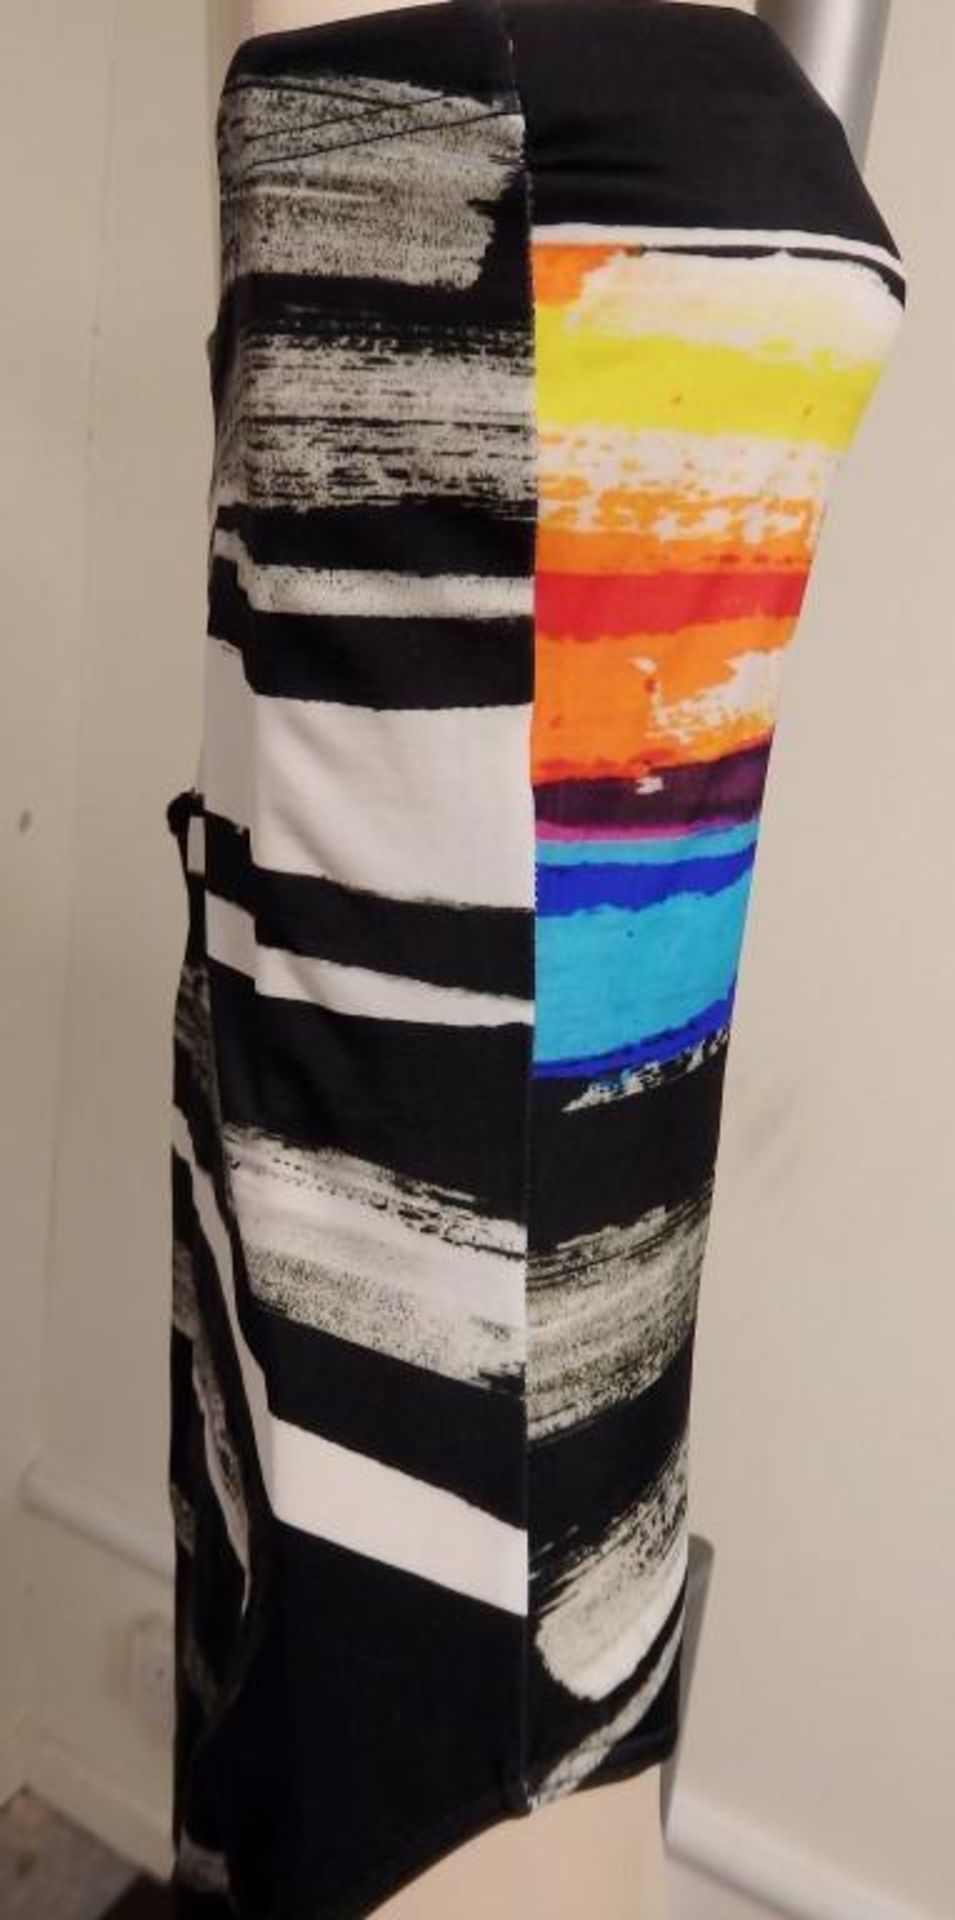 1 x Rasurel - Black/Ecru and vibrant patternedbustier -Cuba Swimsuit - R20738 - Size 2C - UK 32 - Image 6 of 7